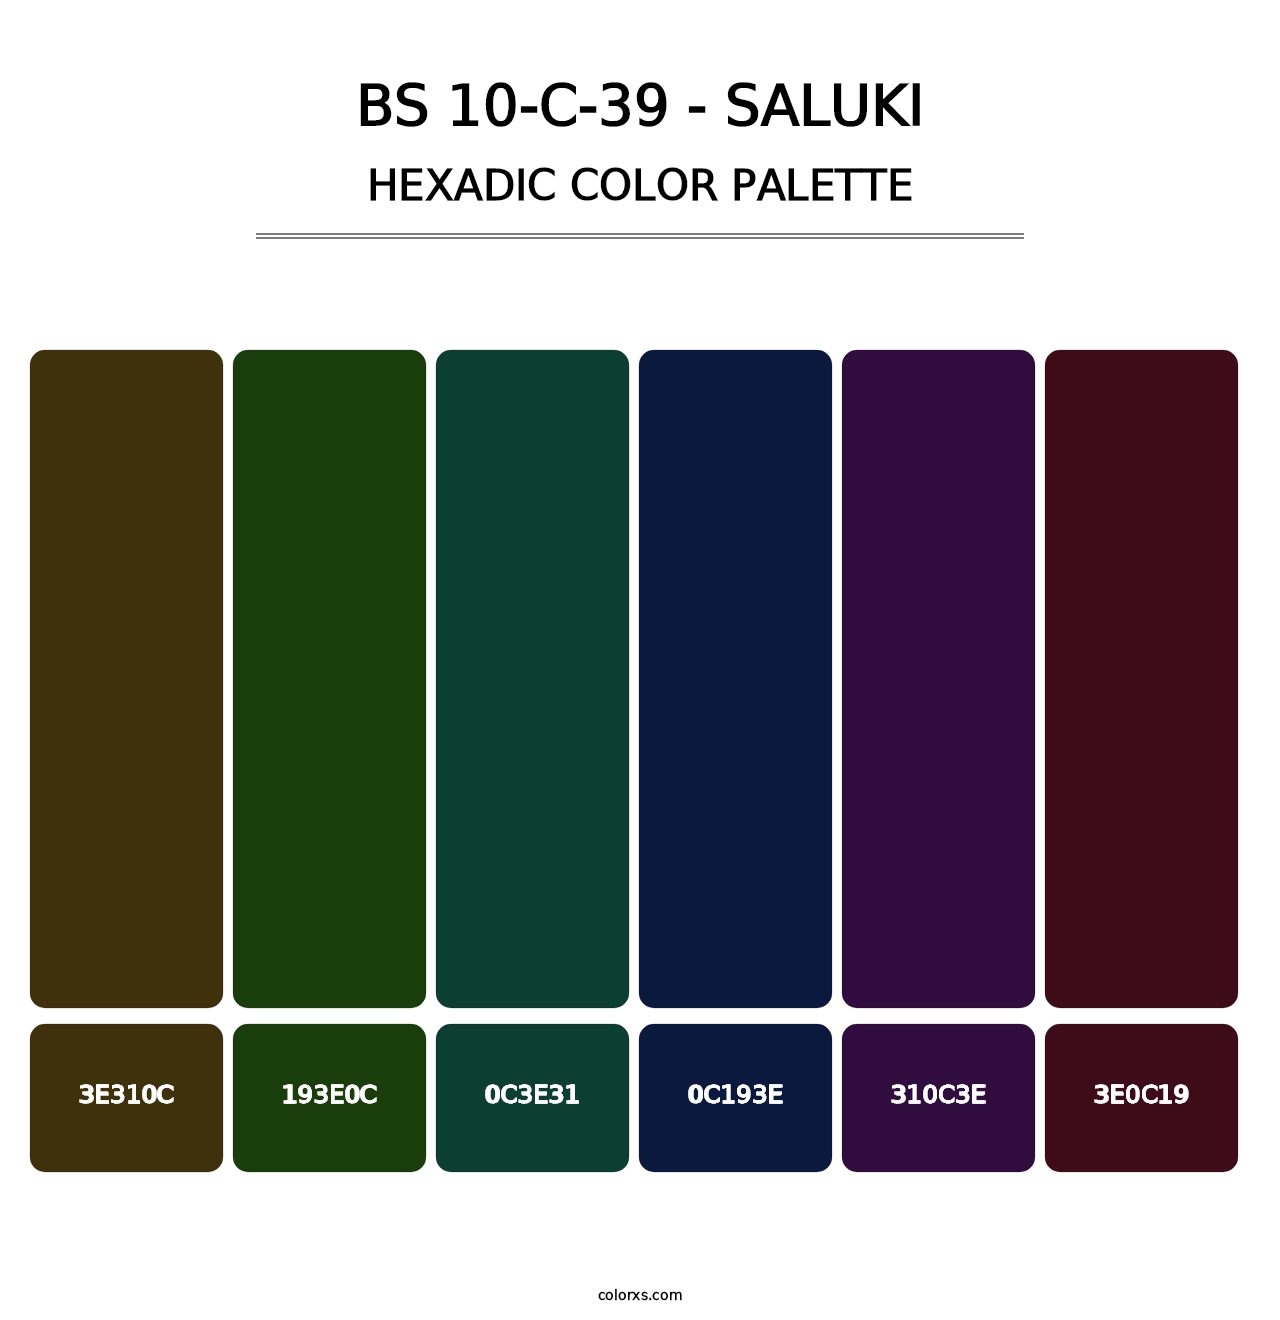 BS 10-C-39 - Saluki - Hexadic Color Palette